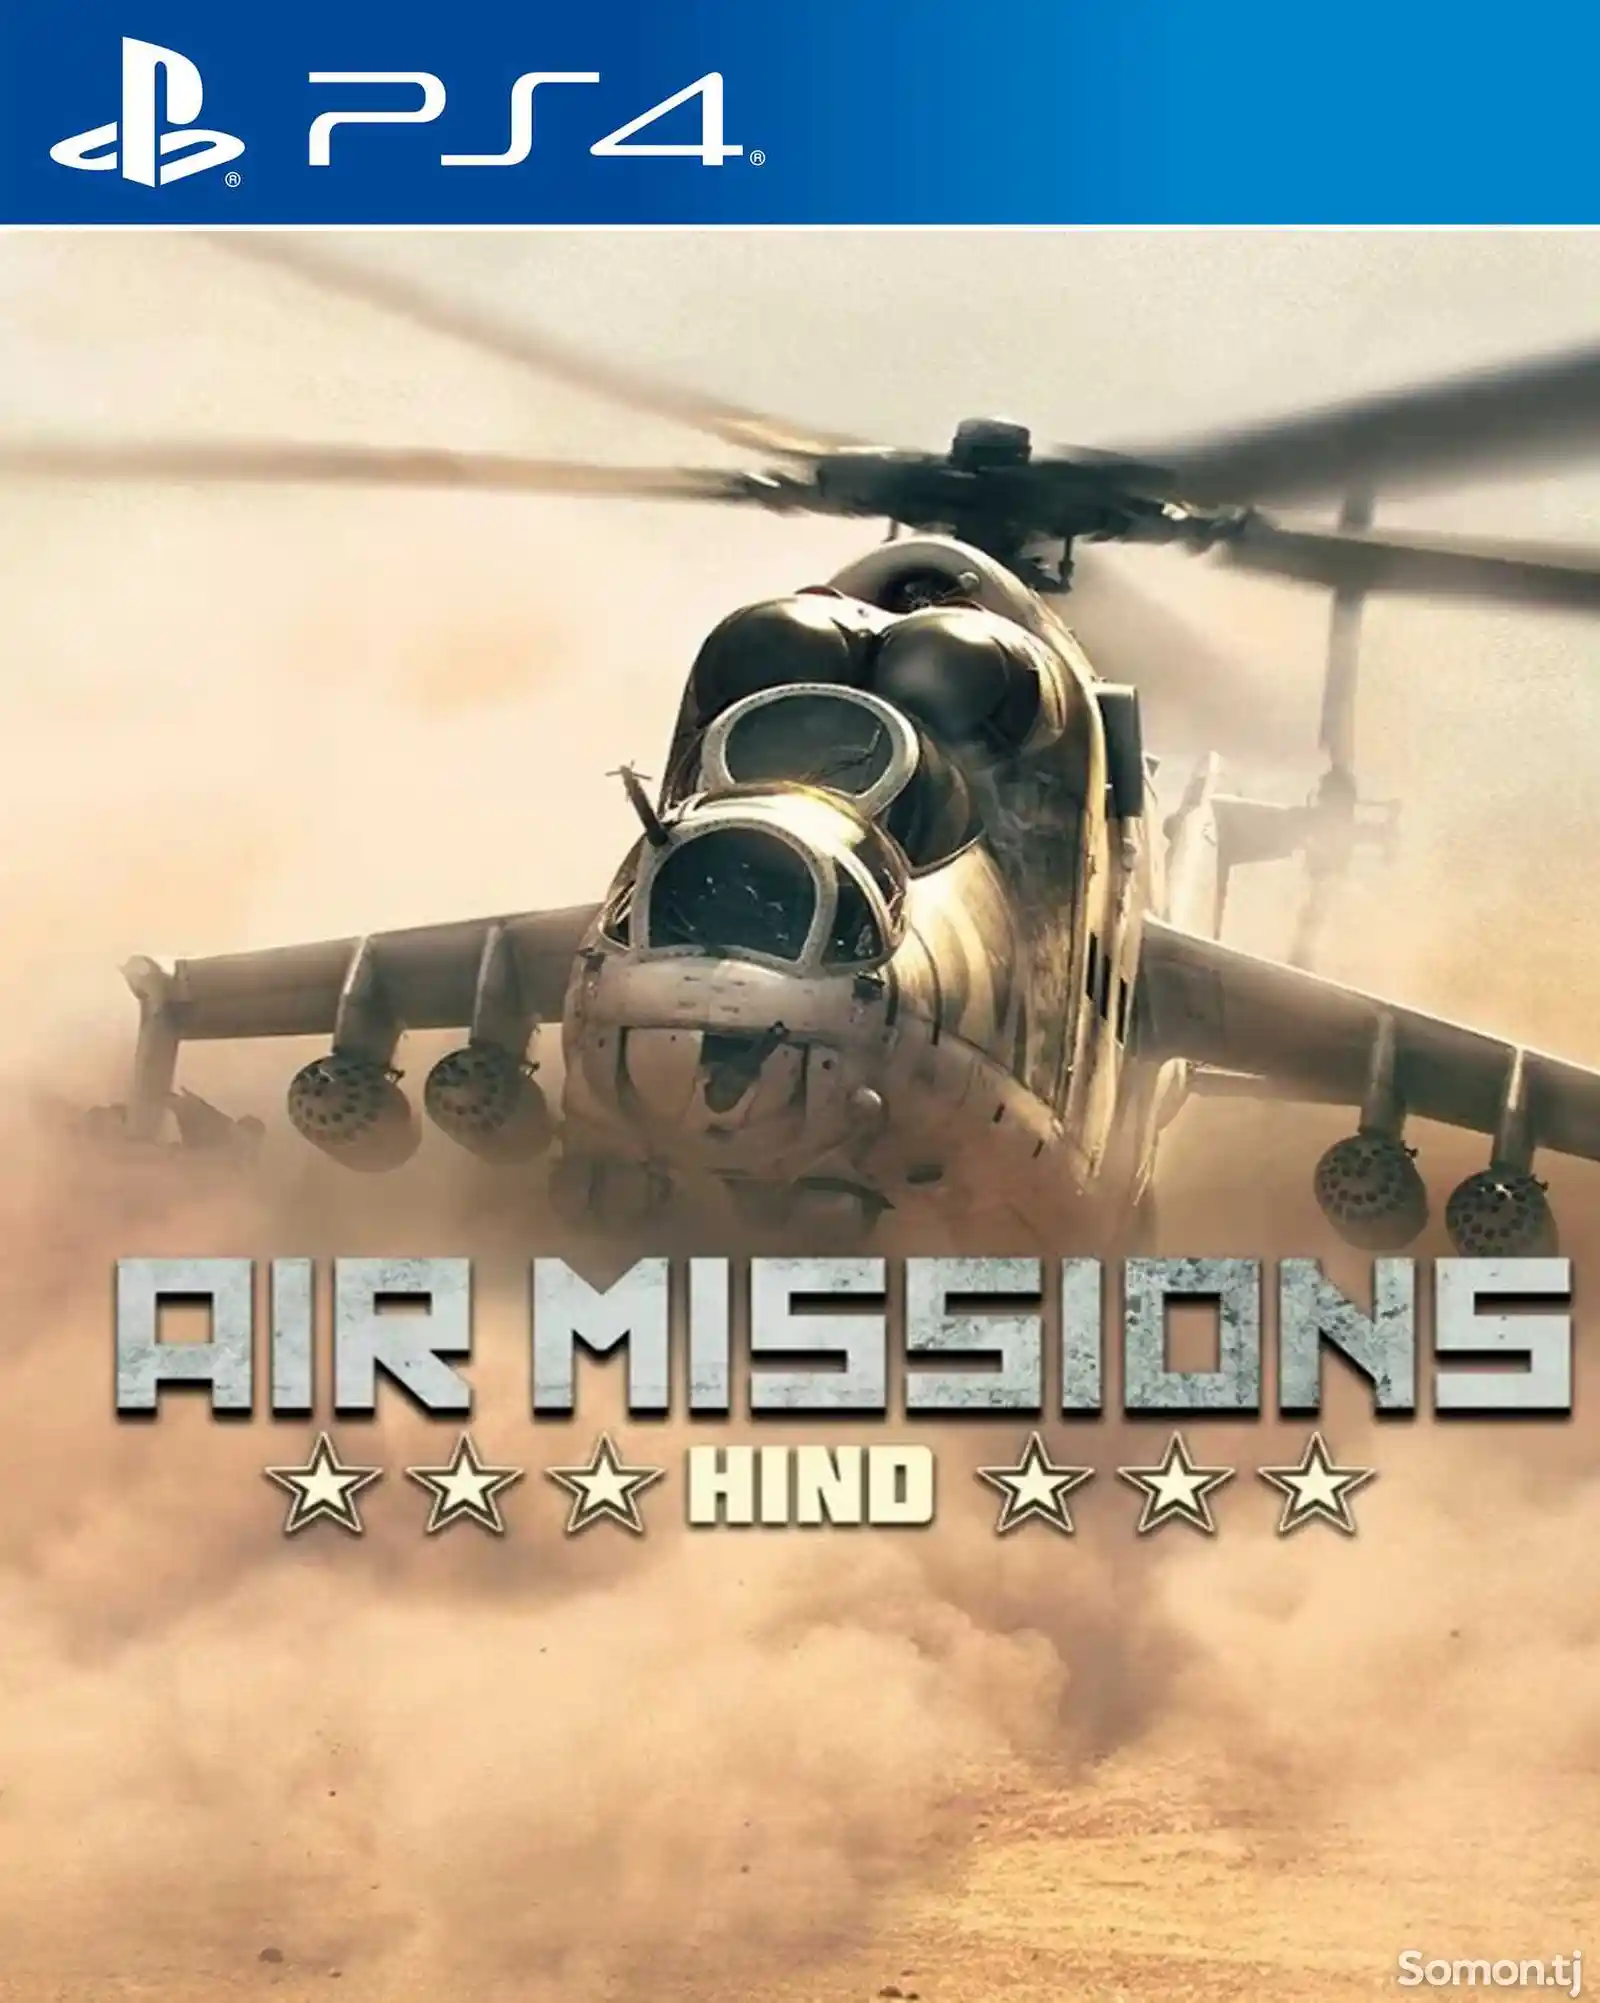 Игра Air missions hind base для PS-4 / 5.05 / 6.72 / 7.02 / 7.55 / 9.00 /-1